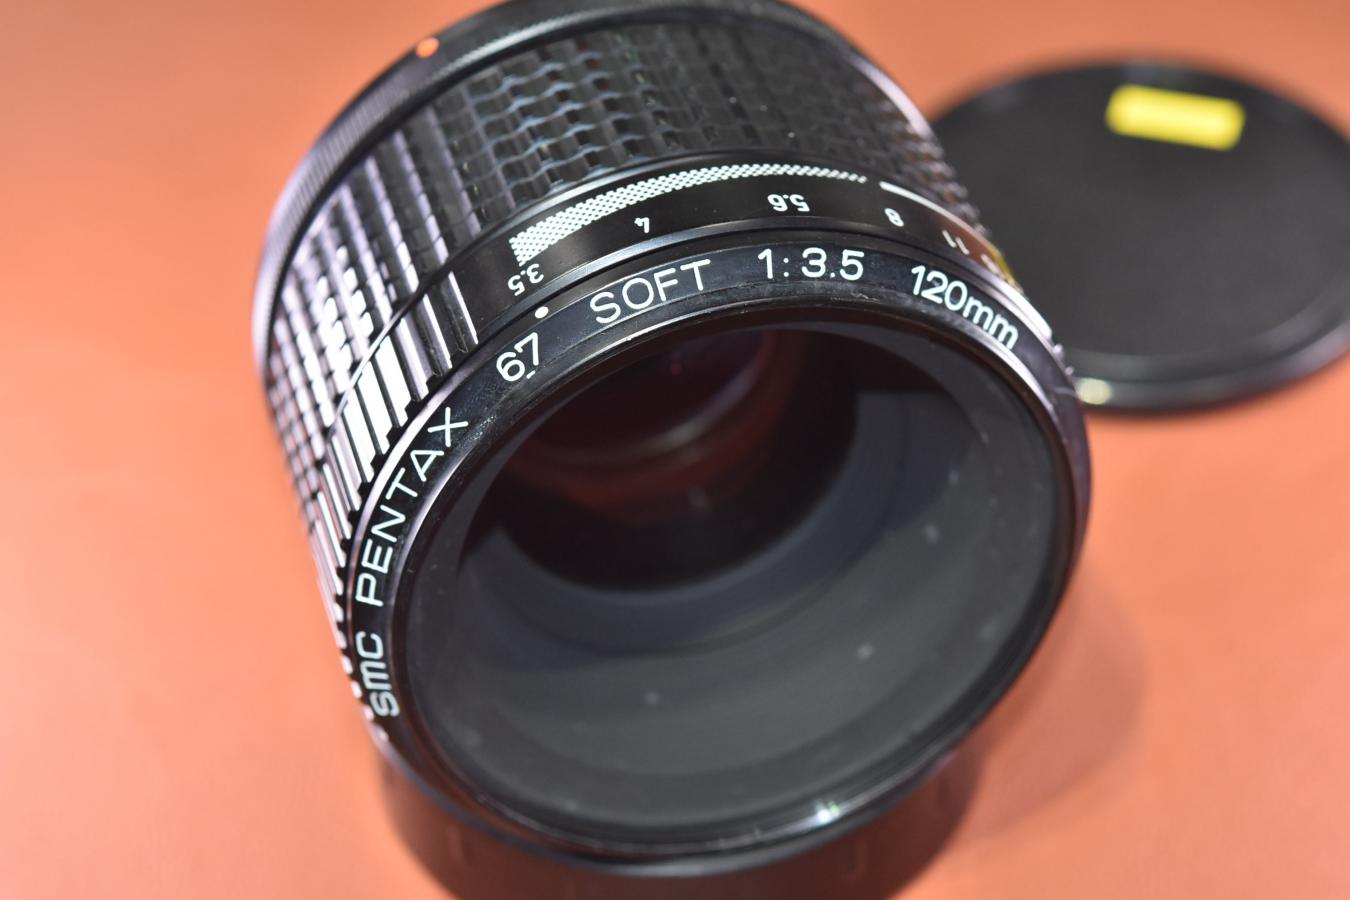 SMC PENTAX 67 SOFT 120mm F3.5 | YAMAGEN CAMERA | カメラのヤマゲン